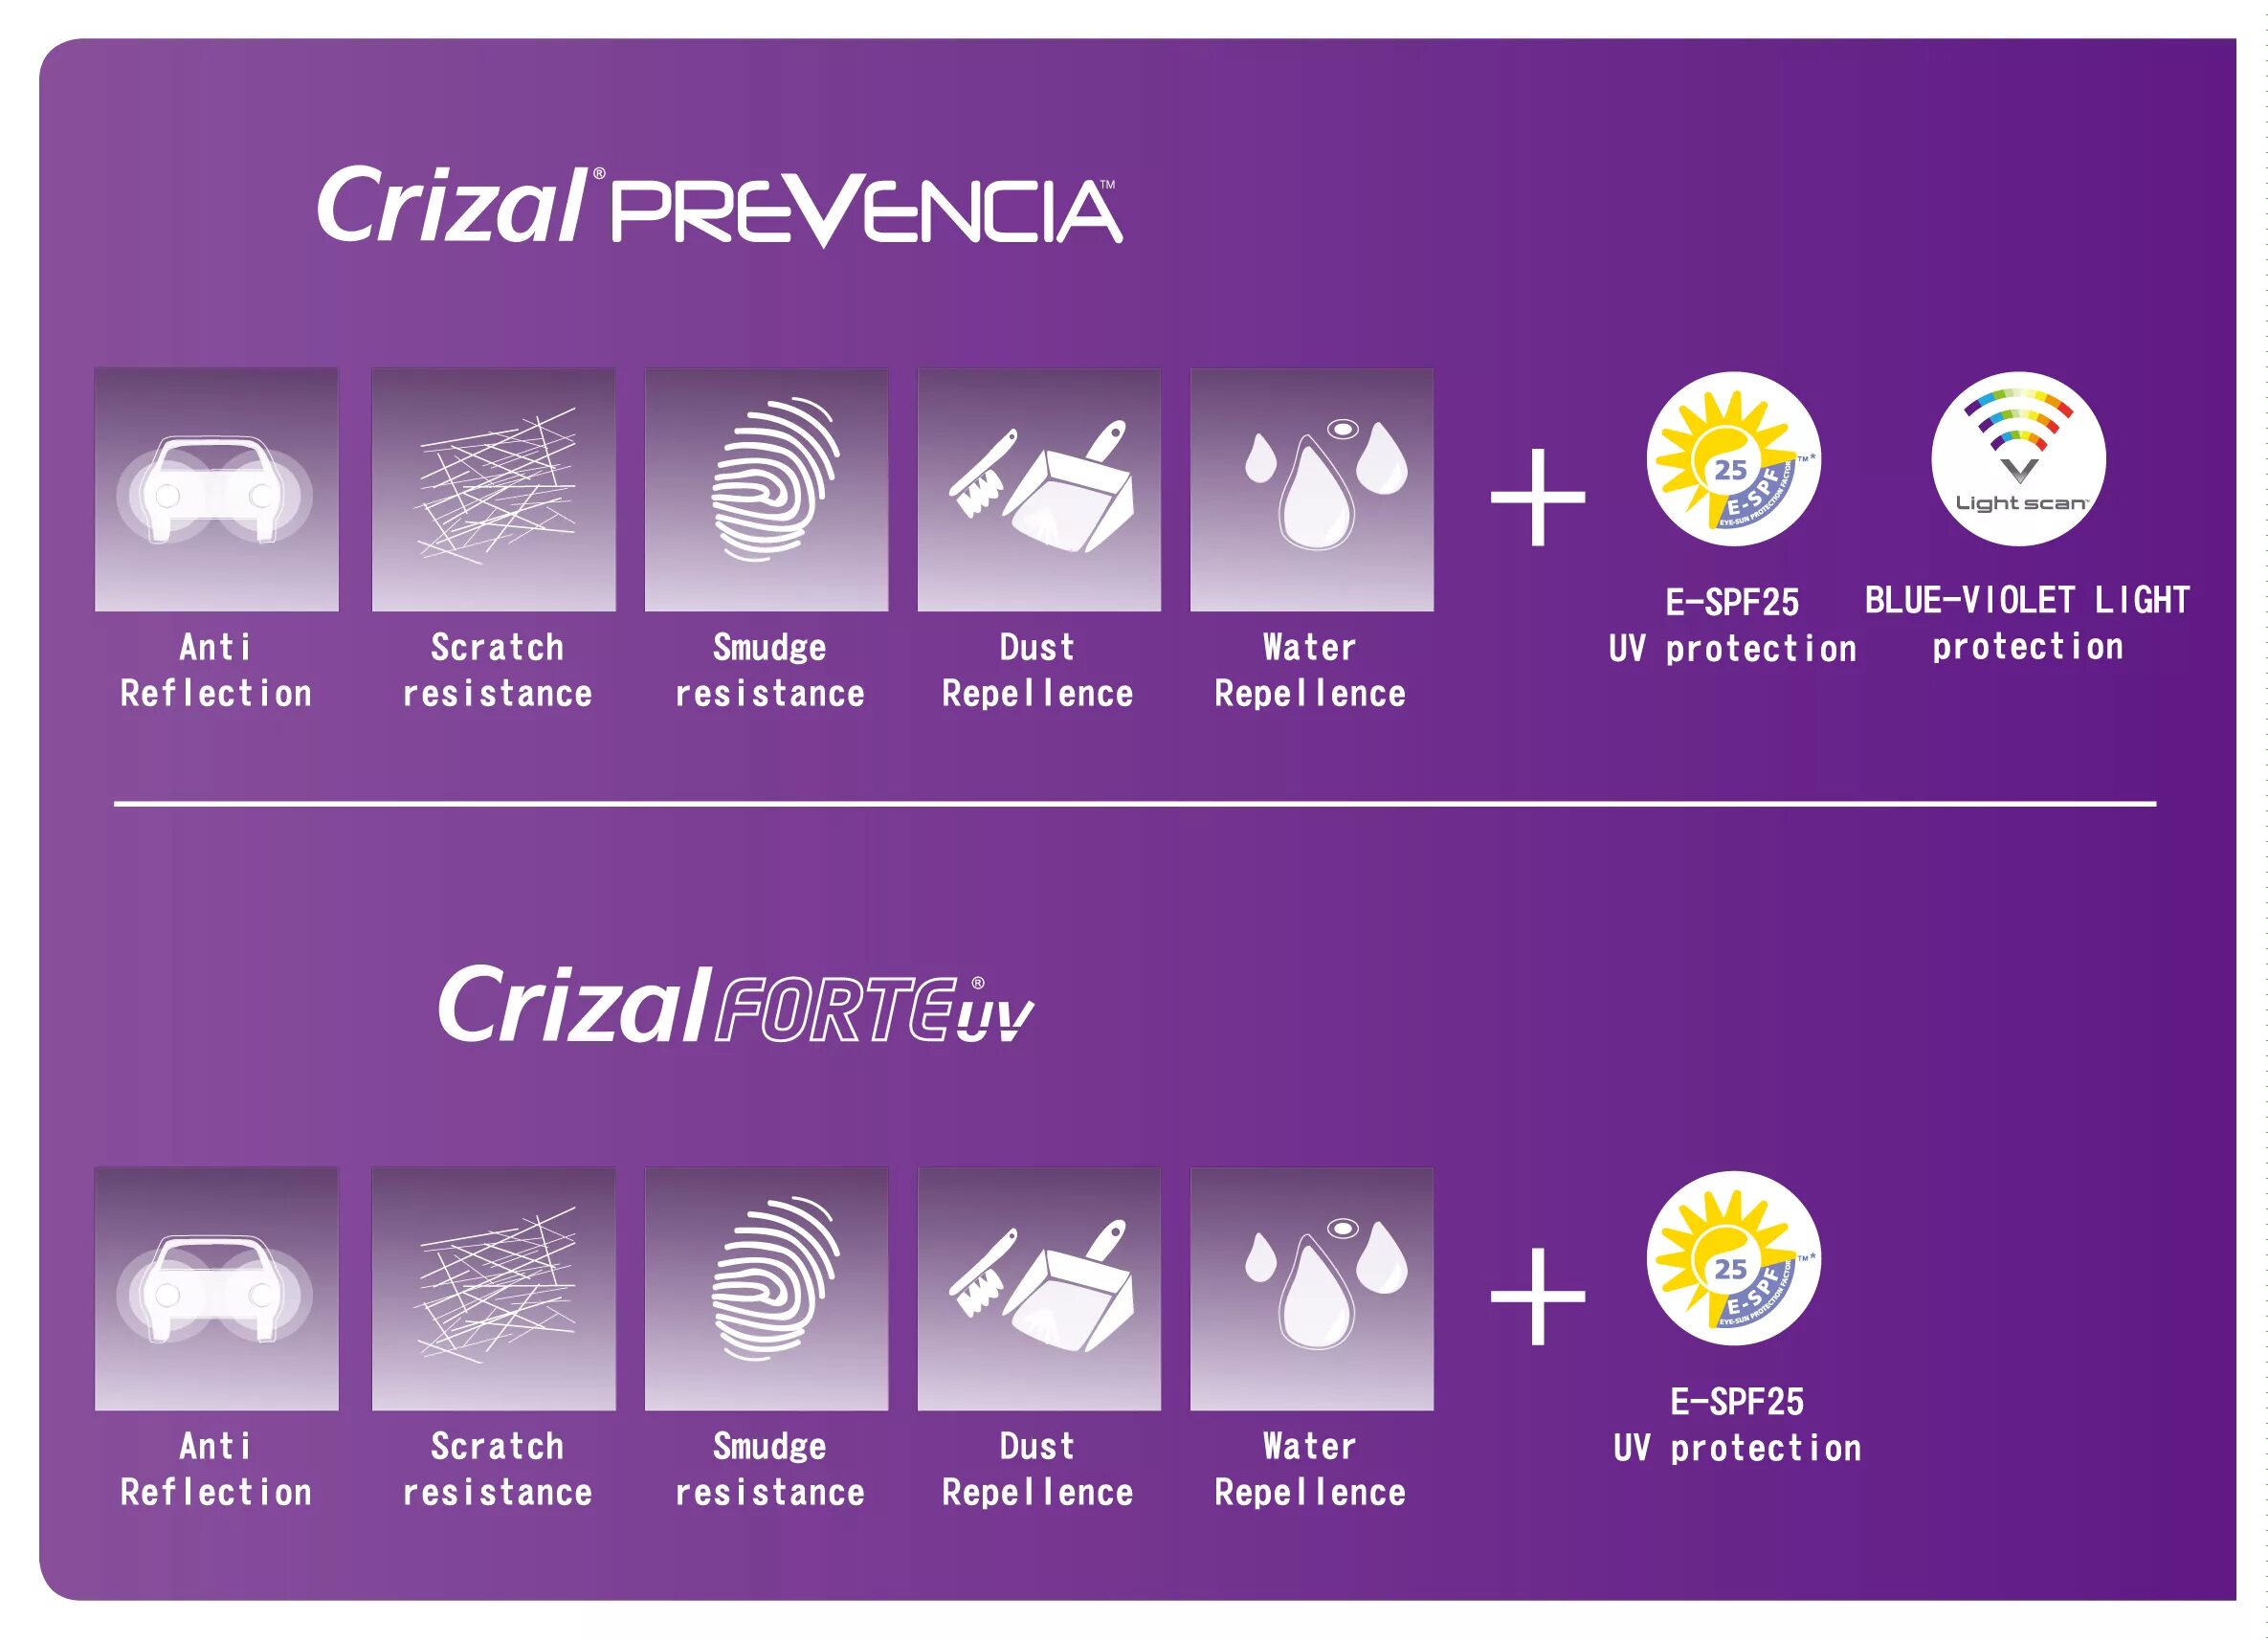 Crizal easy pro. Prevencia линзы. Эссилор линзы превенция. Линзы Crizal prevencia. Покрытие Crizal prevencia.